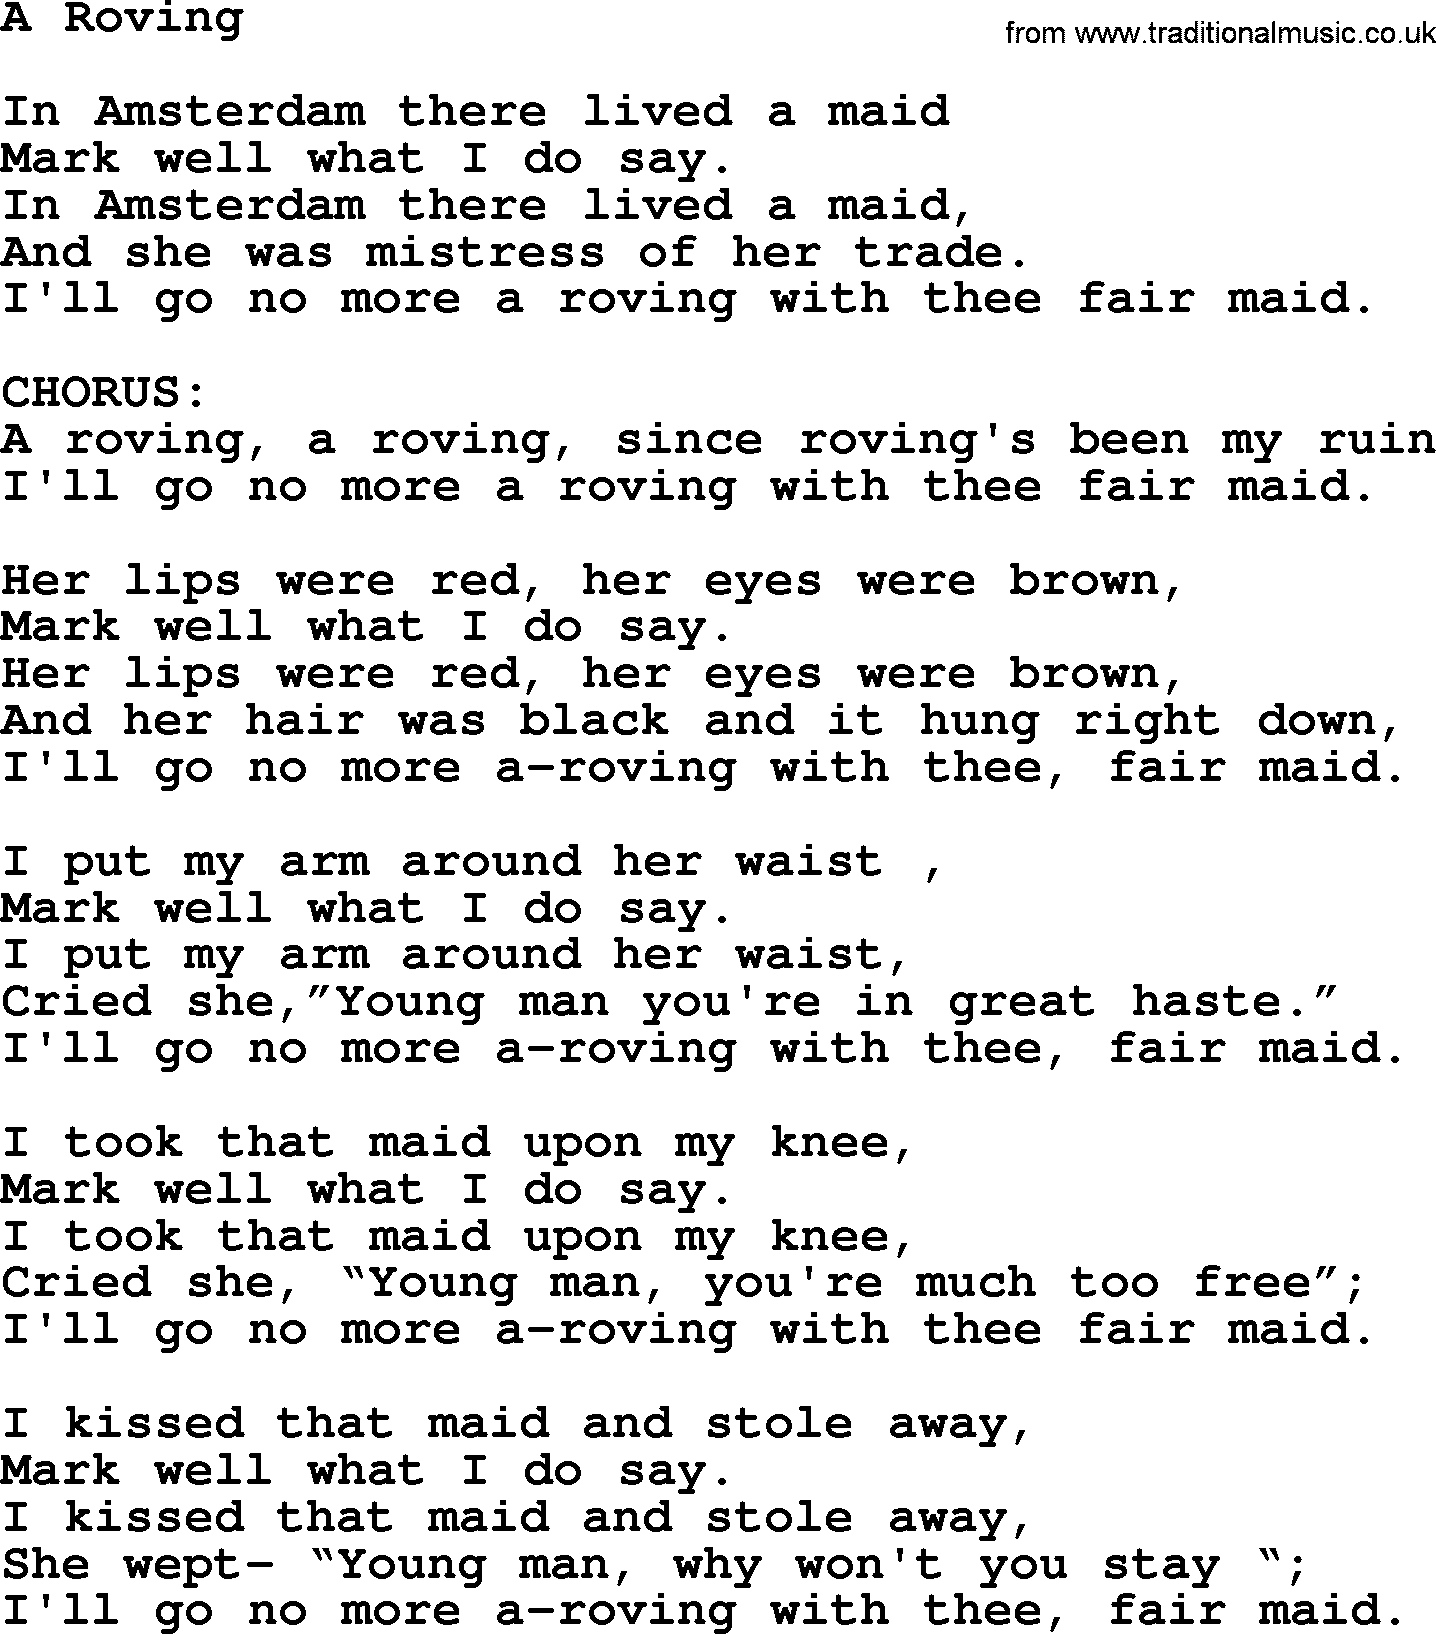 The Byrds song A Roving, lyrics